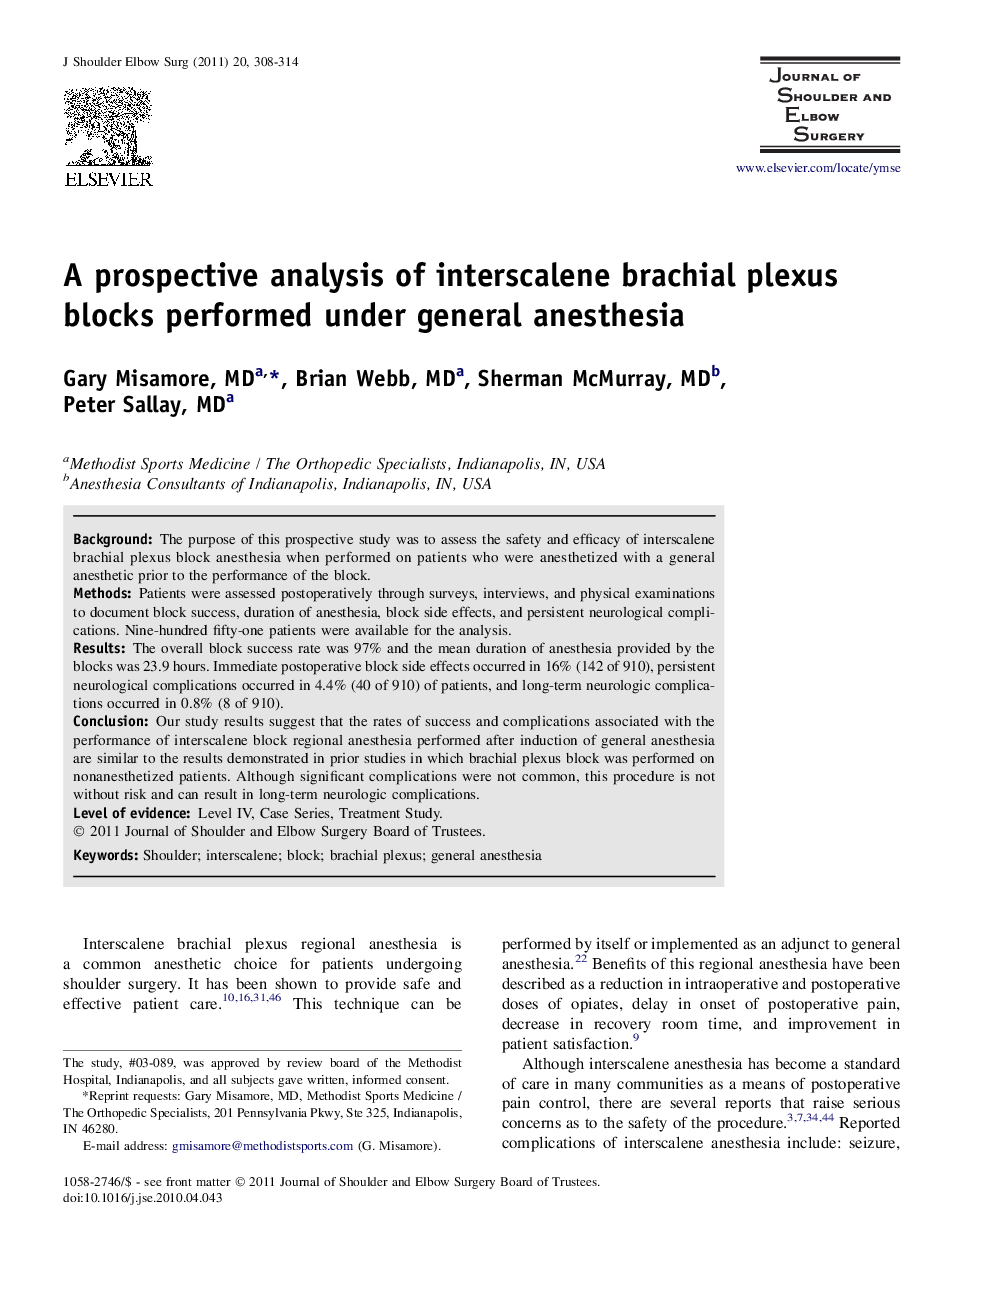 A prospective analysis of interscalene brachial plexus blocks performed under general anesthesia 